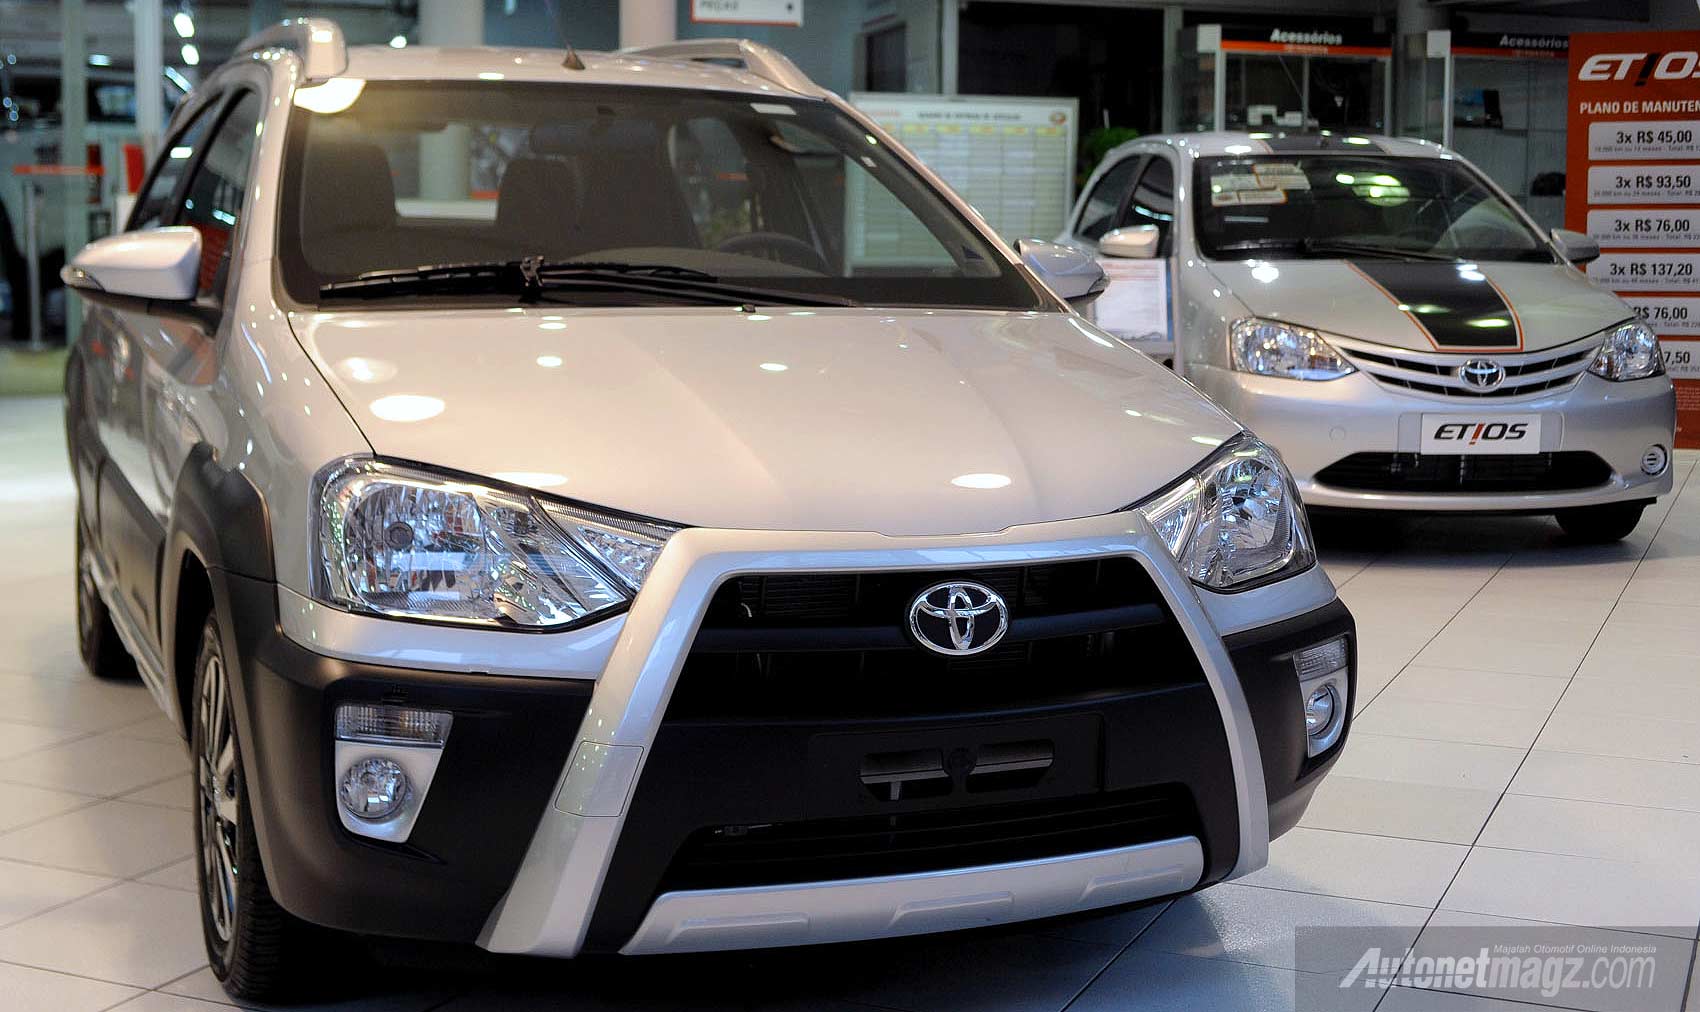 International, Toyota Etios Cross 2014: Toyota Etios Cross : Nih Toyota Etios Crossover Berkumis Lele [Gallery Foto]